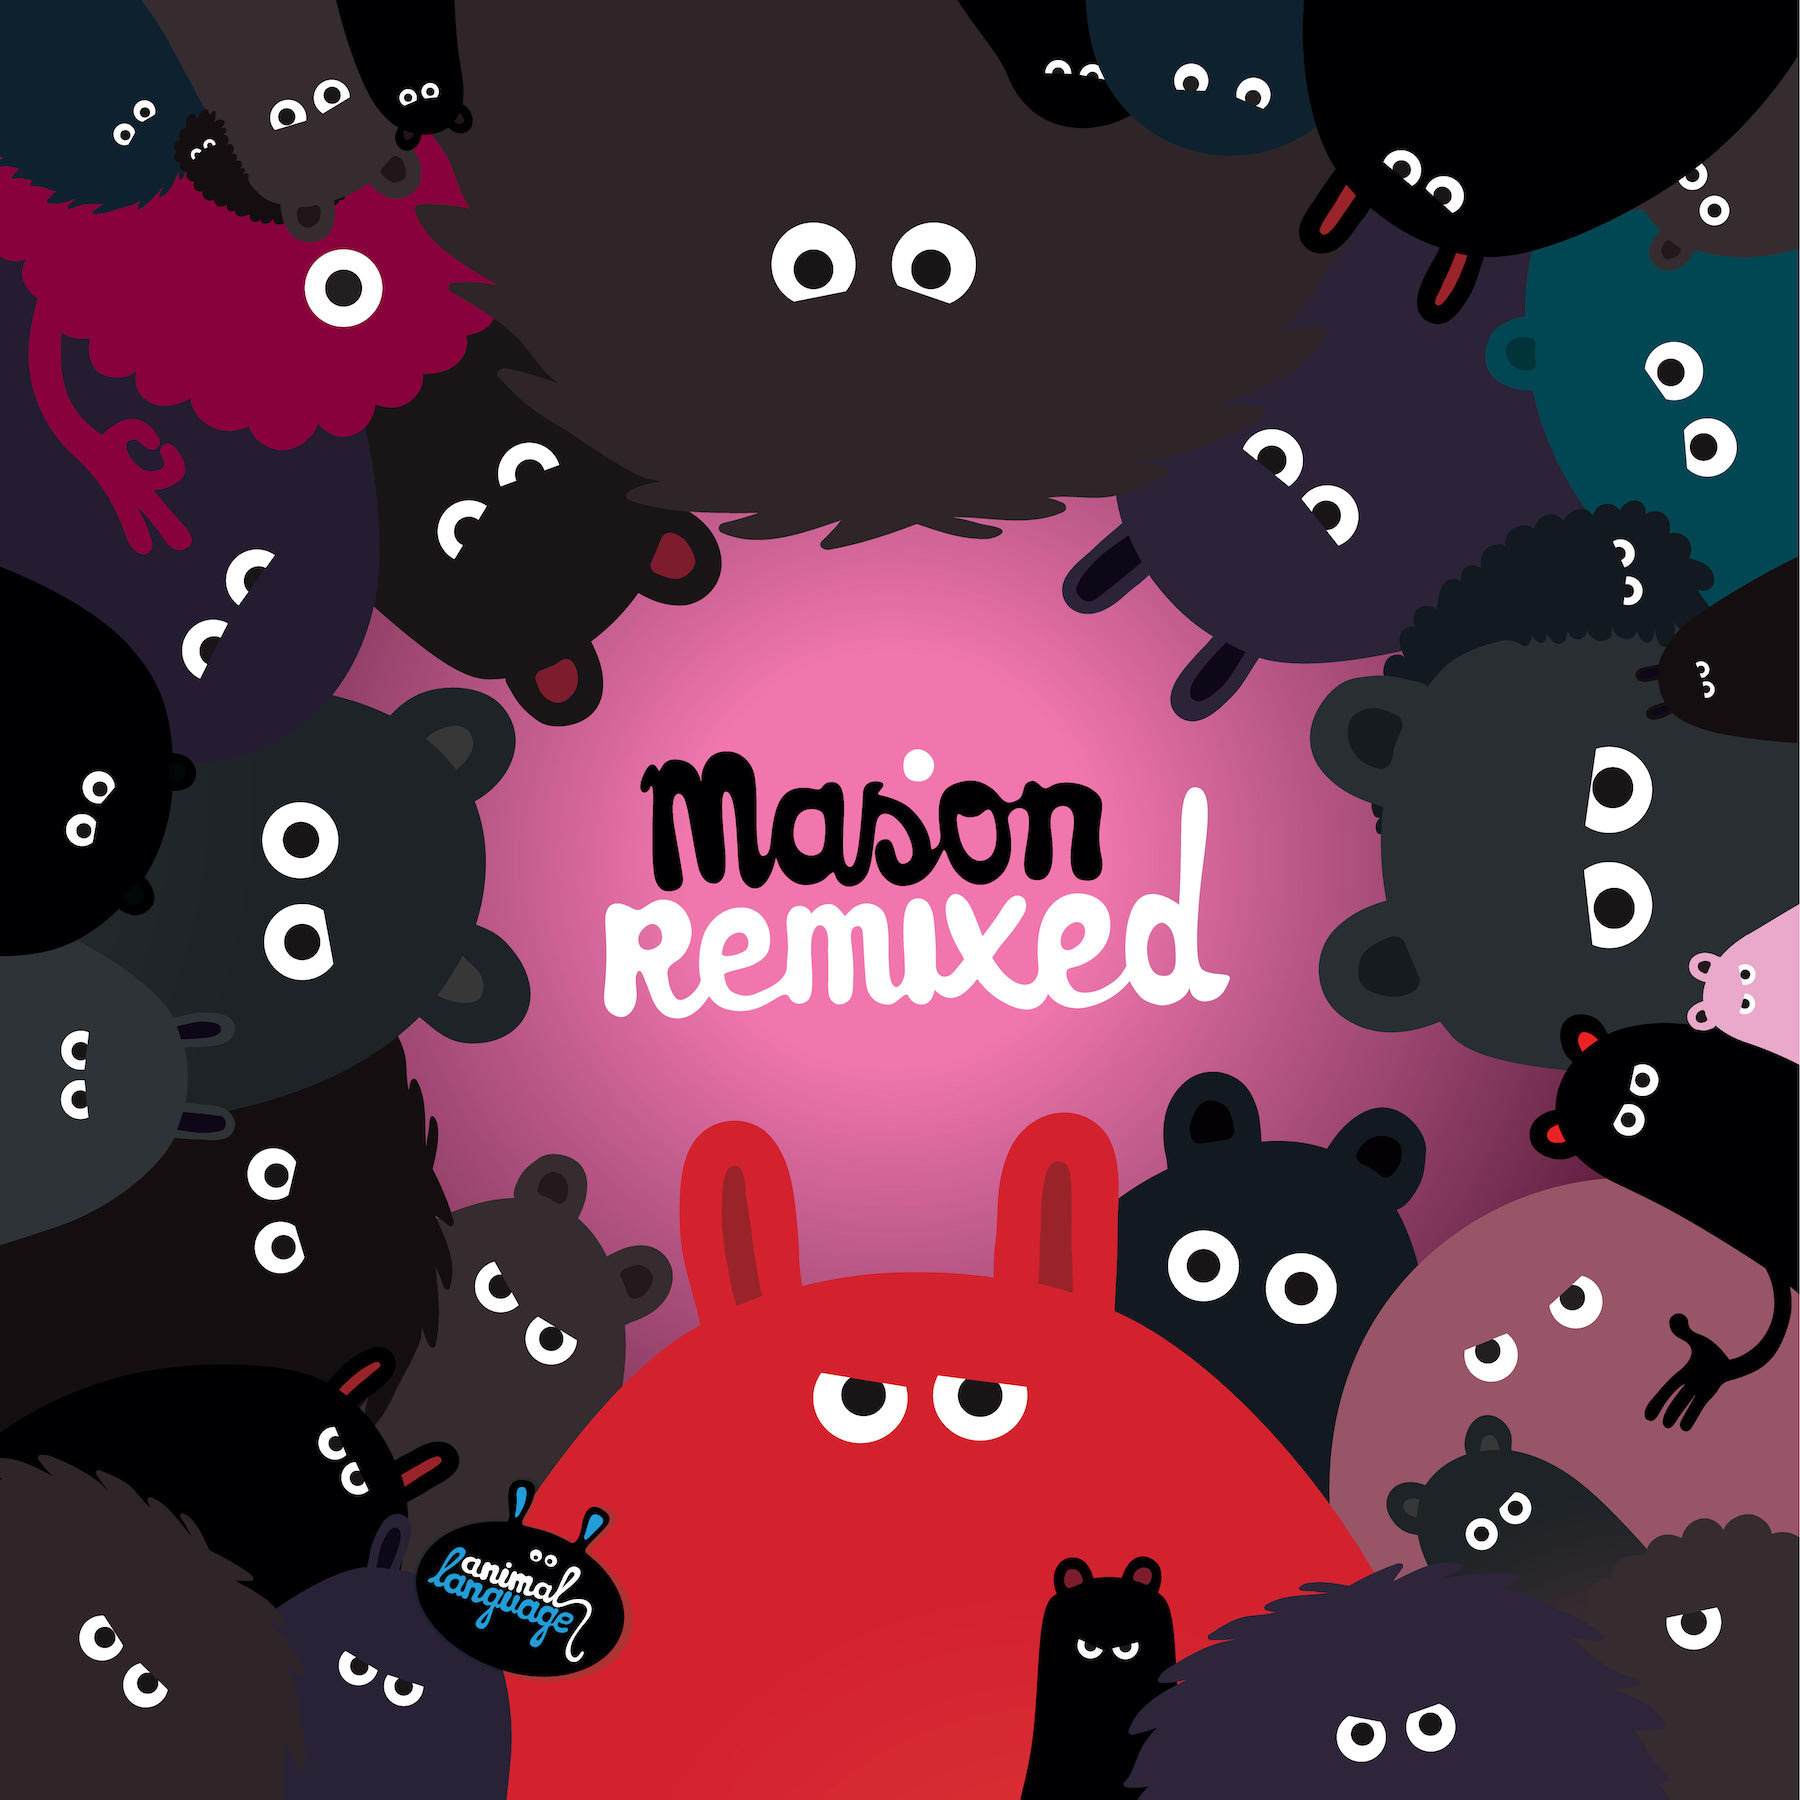 Remix Album - the new Album by Dutch DJ Mason!